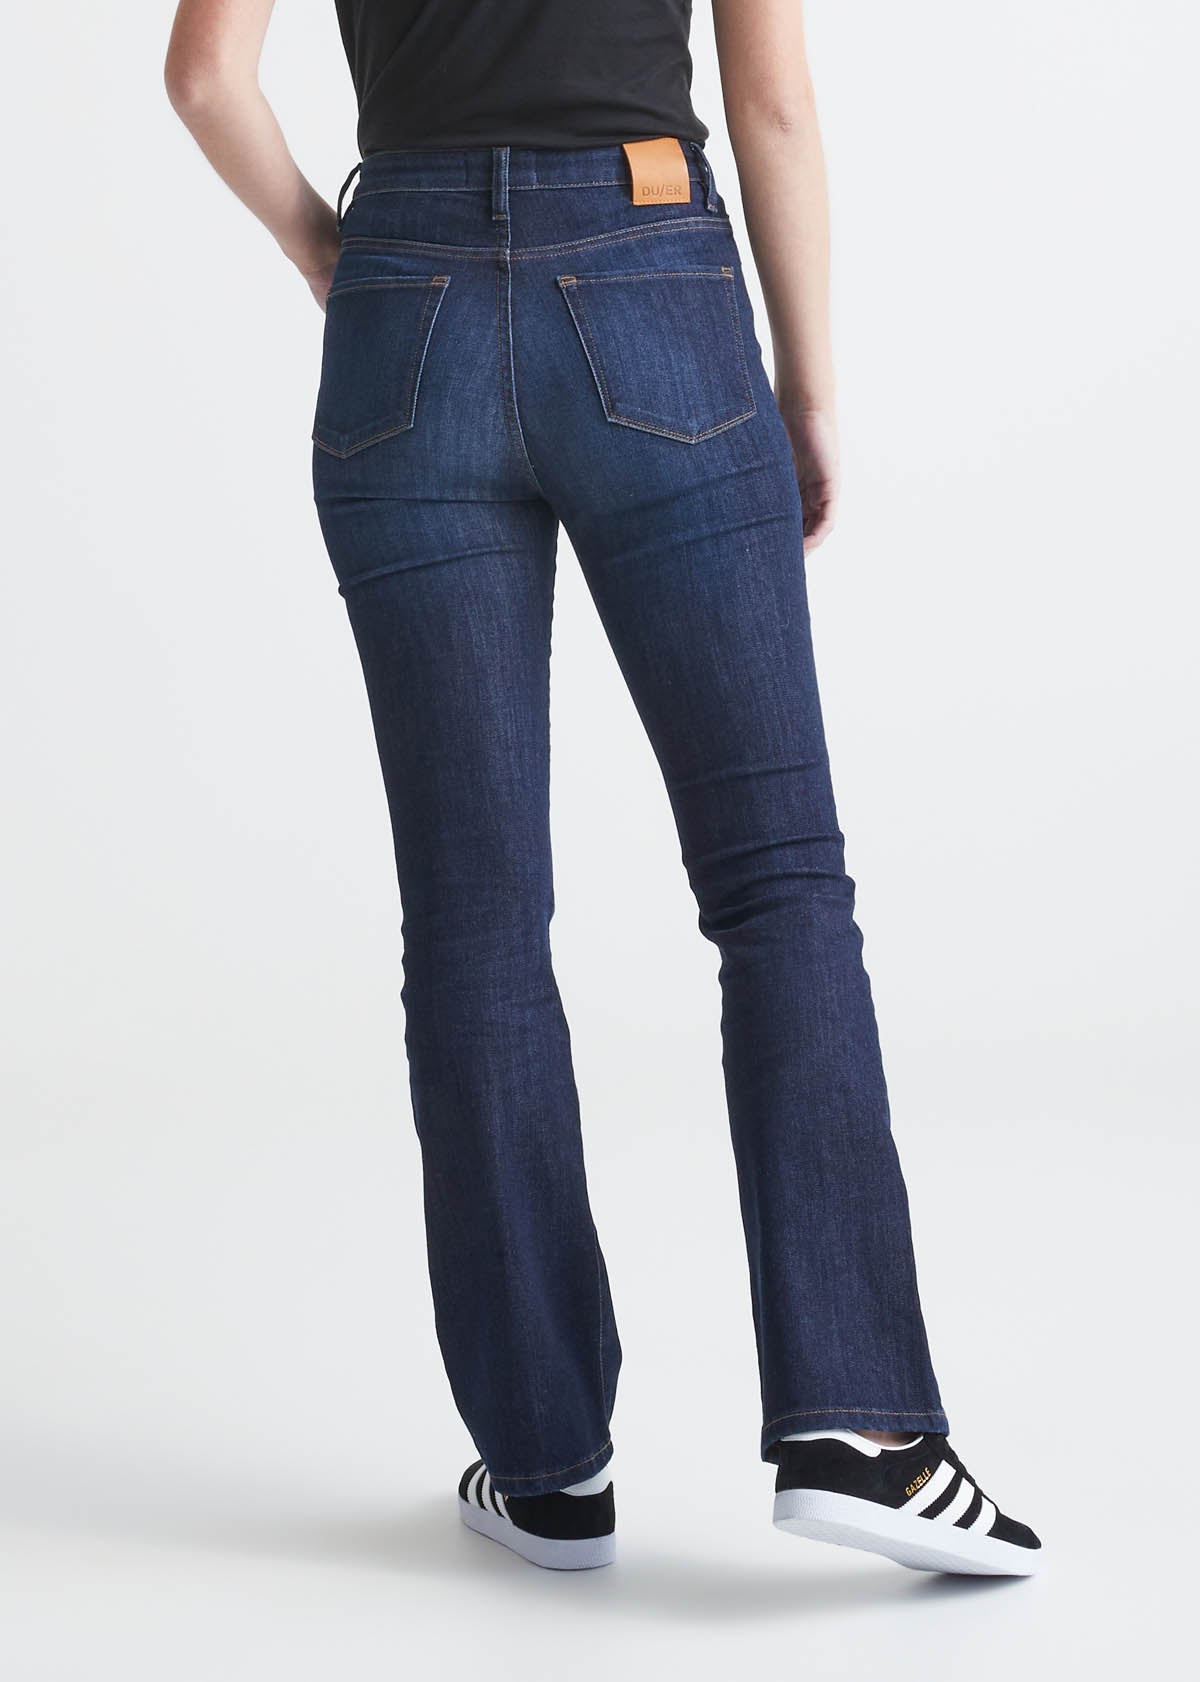 LTS Tall Women's Black Bootcut Denim Jeans | Long Tall Sally